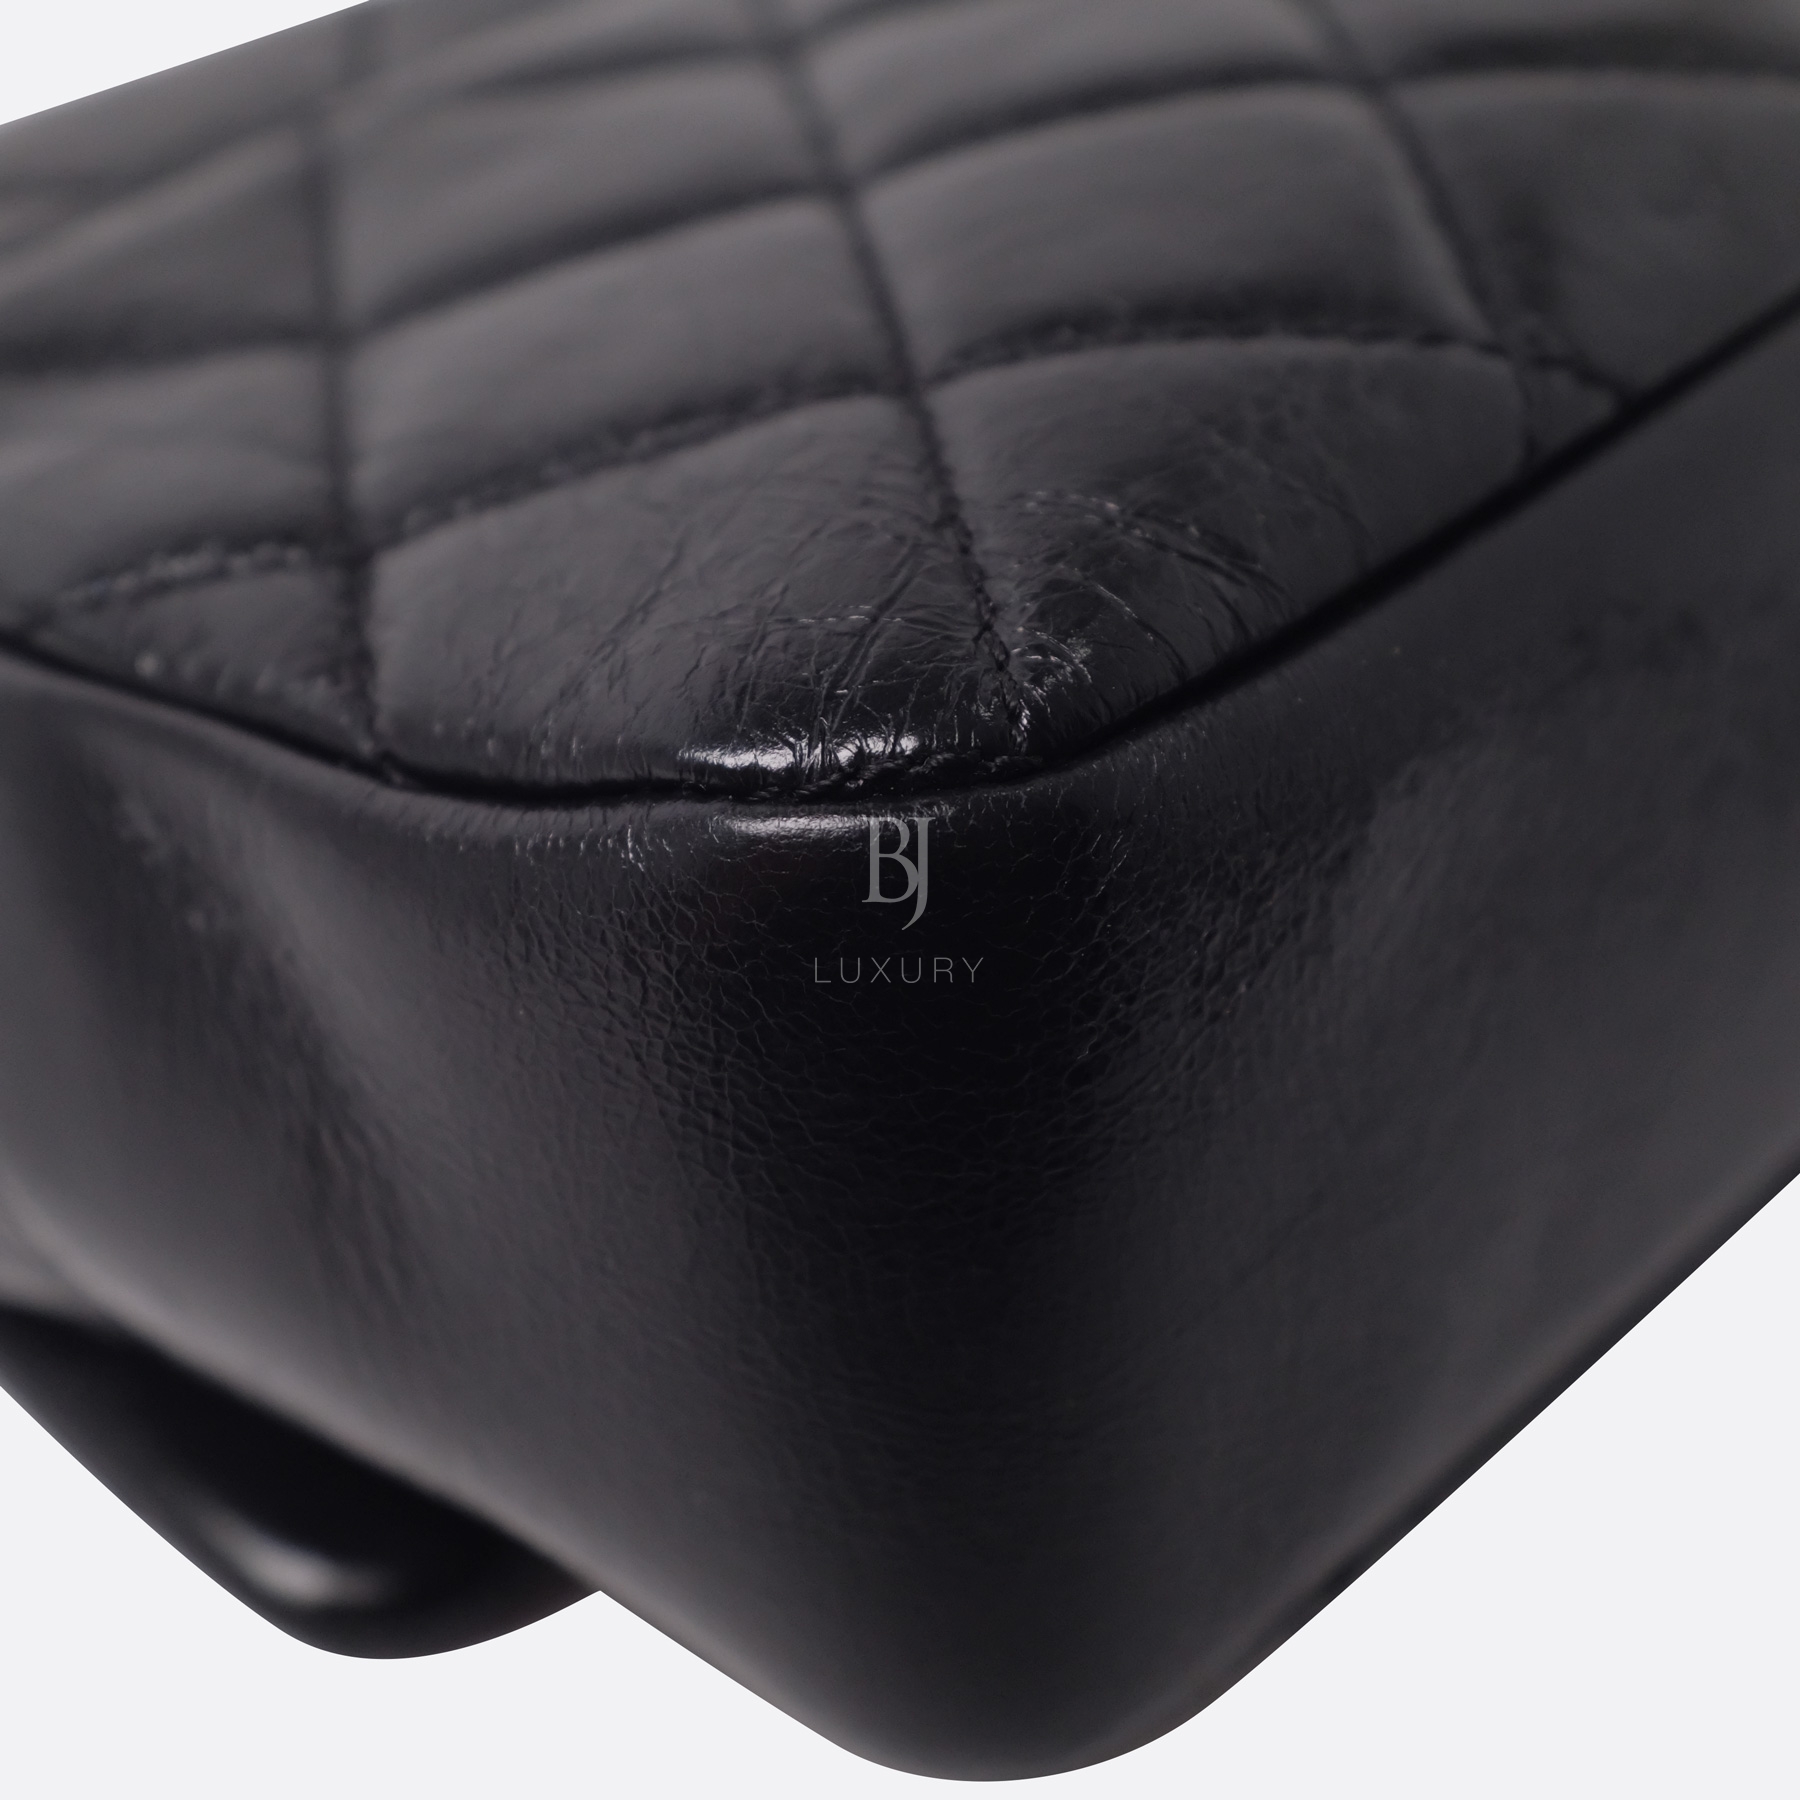 Chanel Flap Bag Aged Calfskin Ruthenium Medium Black BJ Luxury 12.jpg